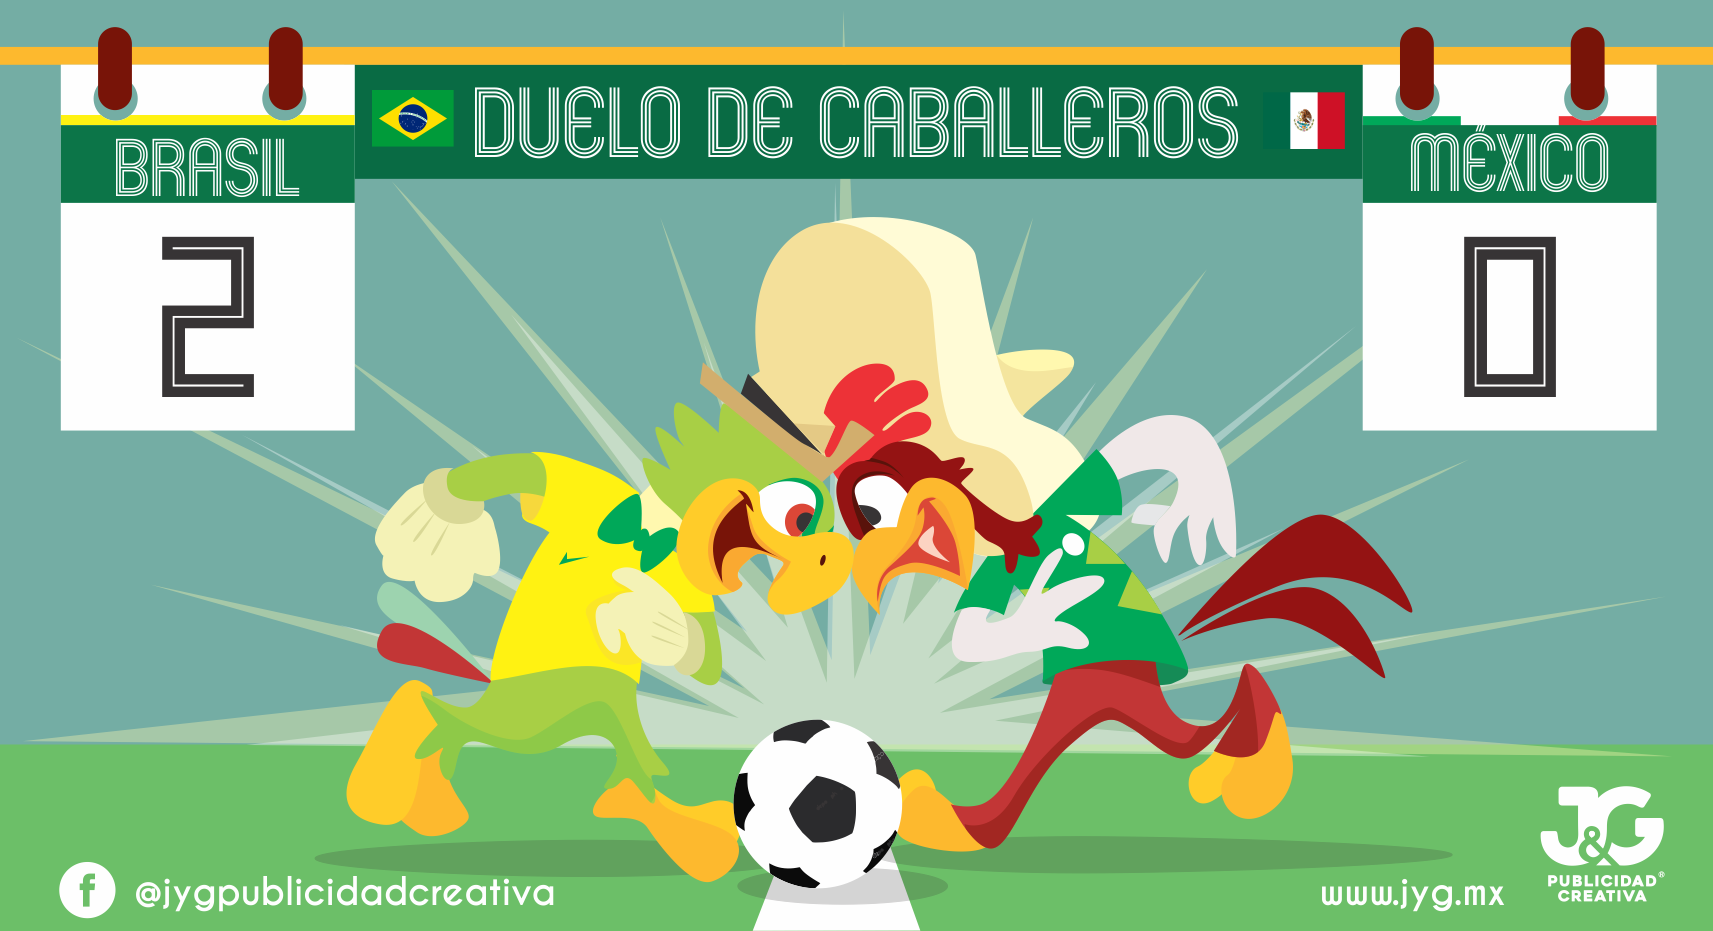 Resultado del partido Brasil- México. Duelo de Caballeros. 🇧🇷 ️🇲🇽